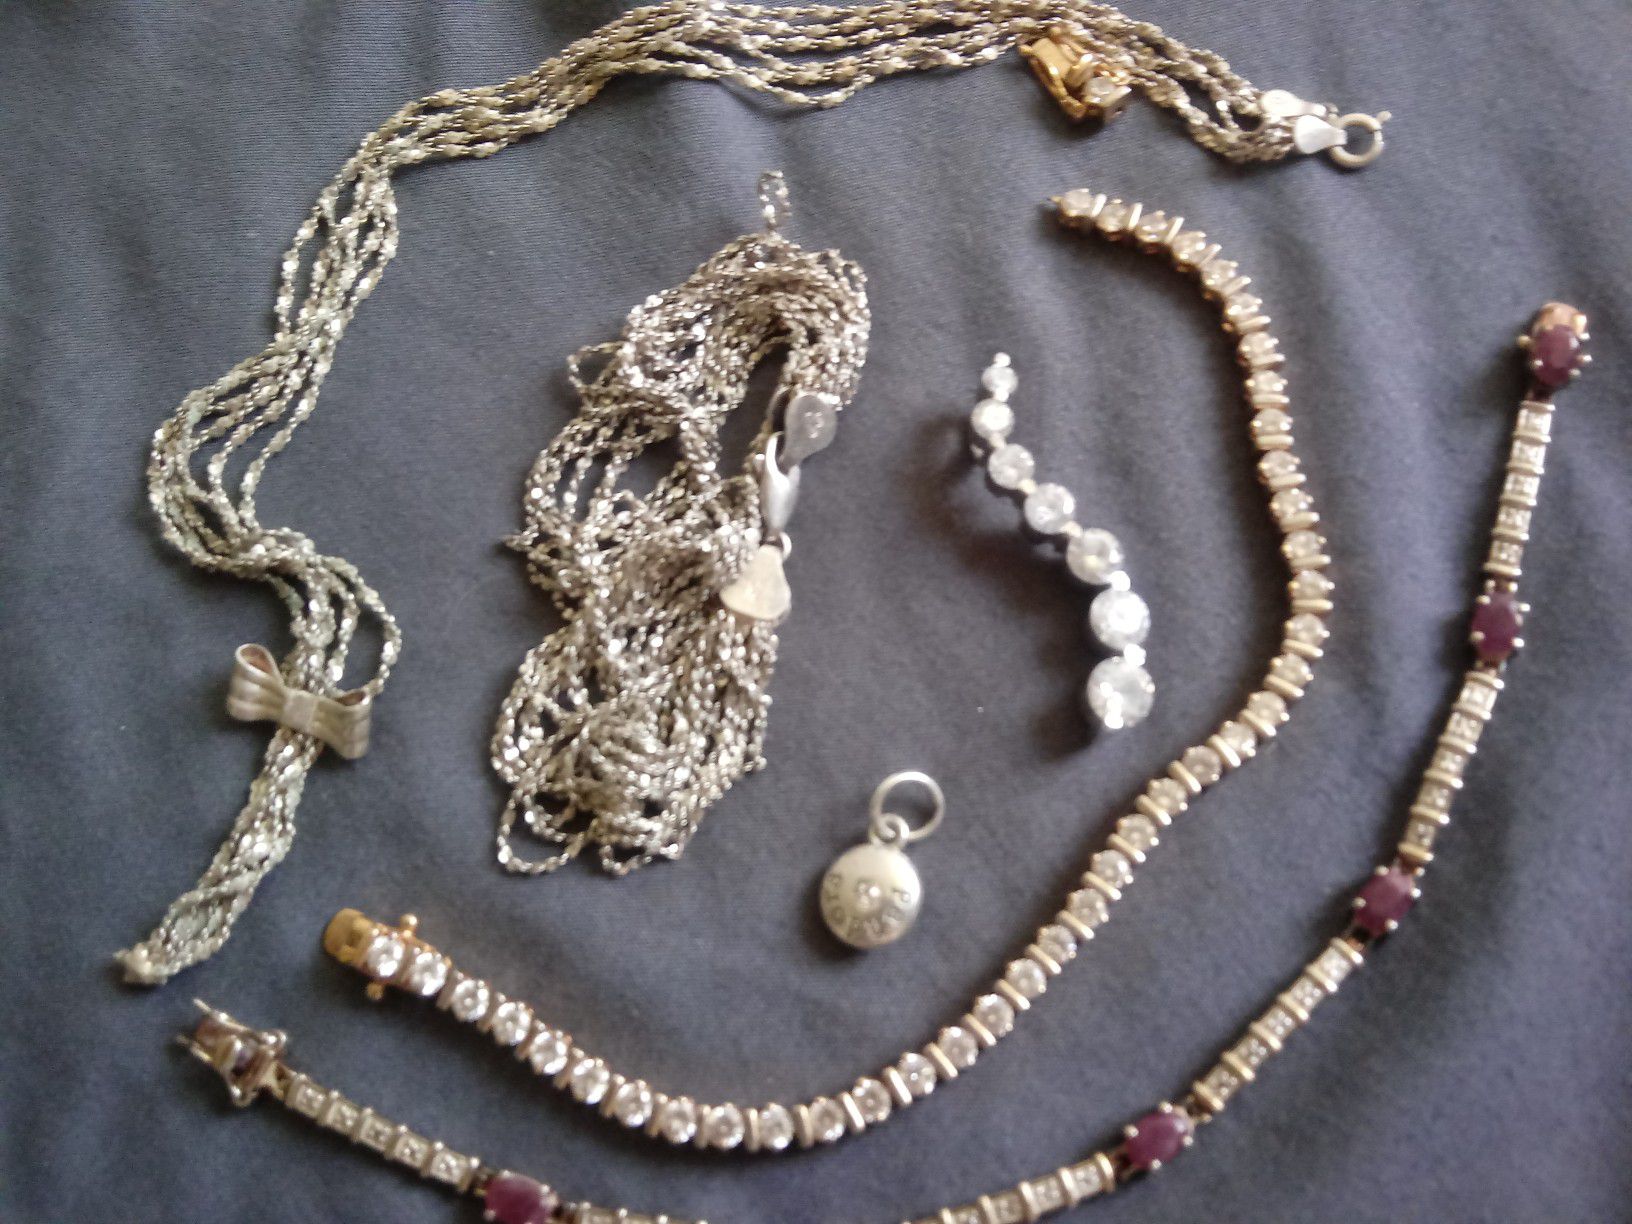 All marked 925 tennis bracelets necklace bracelet set pendant and pandora charm lot